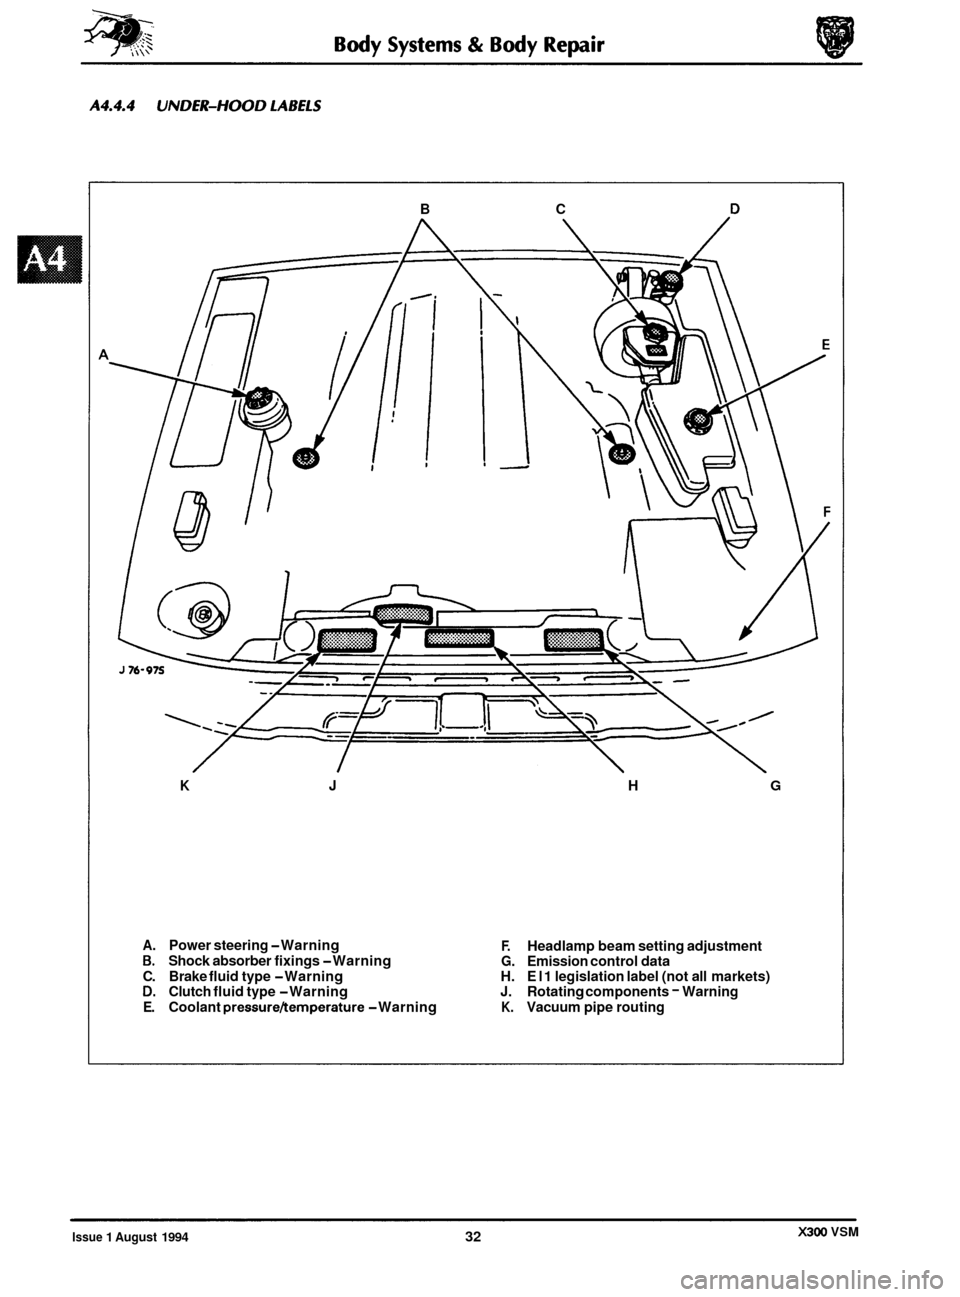 JAGUAR XJ6 1994 2.G Owners Guide B  C D 
K J H G 
A. Power steering -Warning F. Headlamp beam setting adjustment B. Shock absorber  fixings -Warning G. Emission control data 
C.  Brake  fluid type -Warning  H. El 1 legislation label 